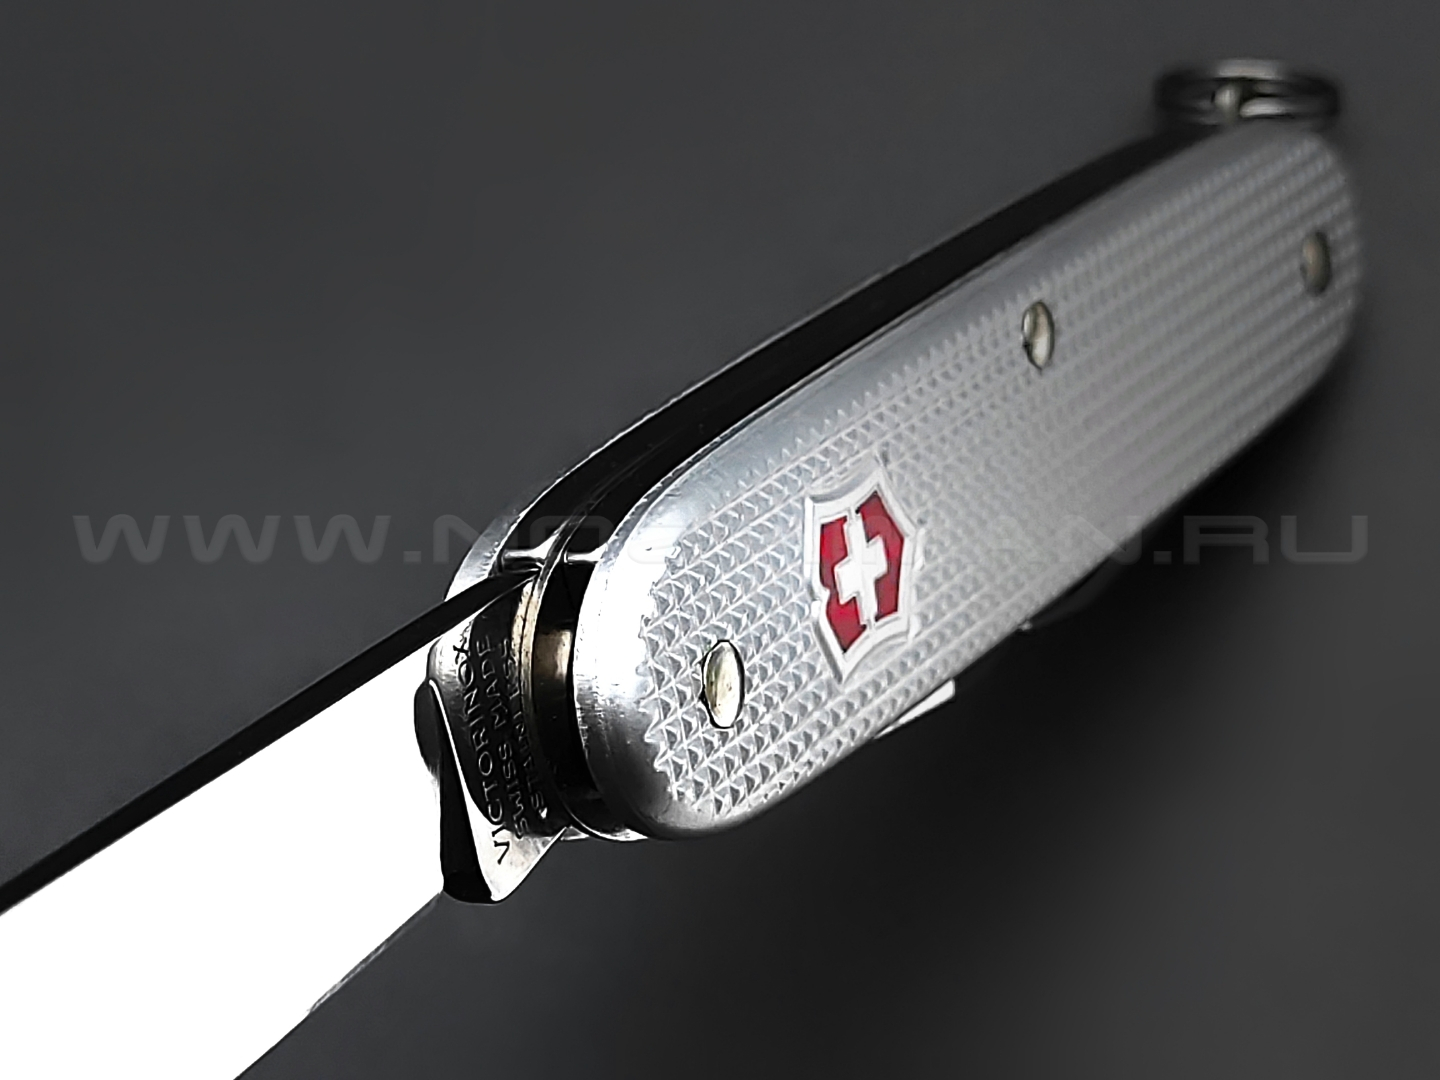 Швейцарский нож Victorinox 0.8201.26 Pioneer Alox silver (8 функций)